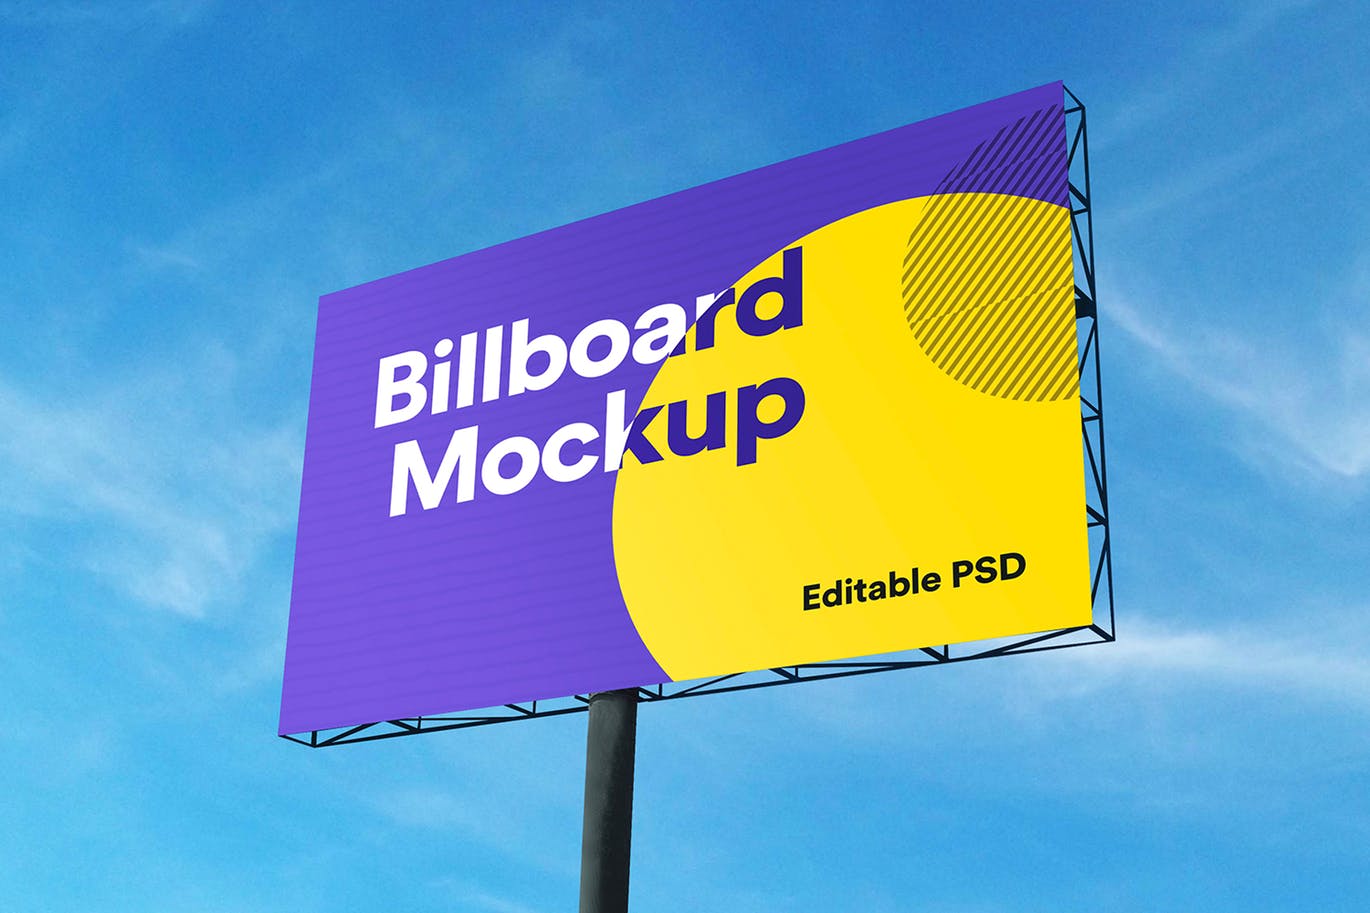 广告牌效果图样机模板 advertisement billboard mockup – 设计小咖